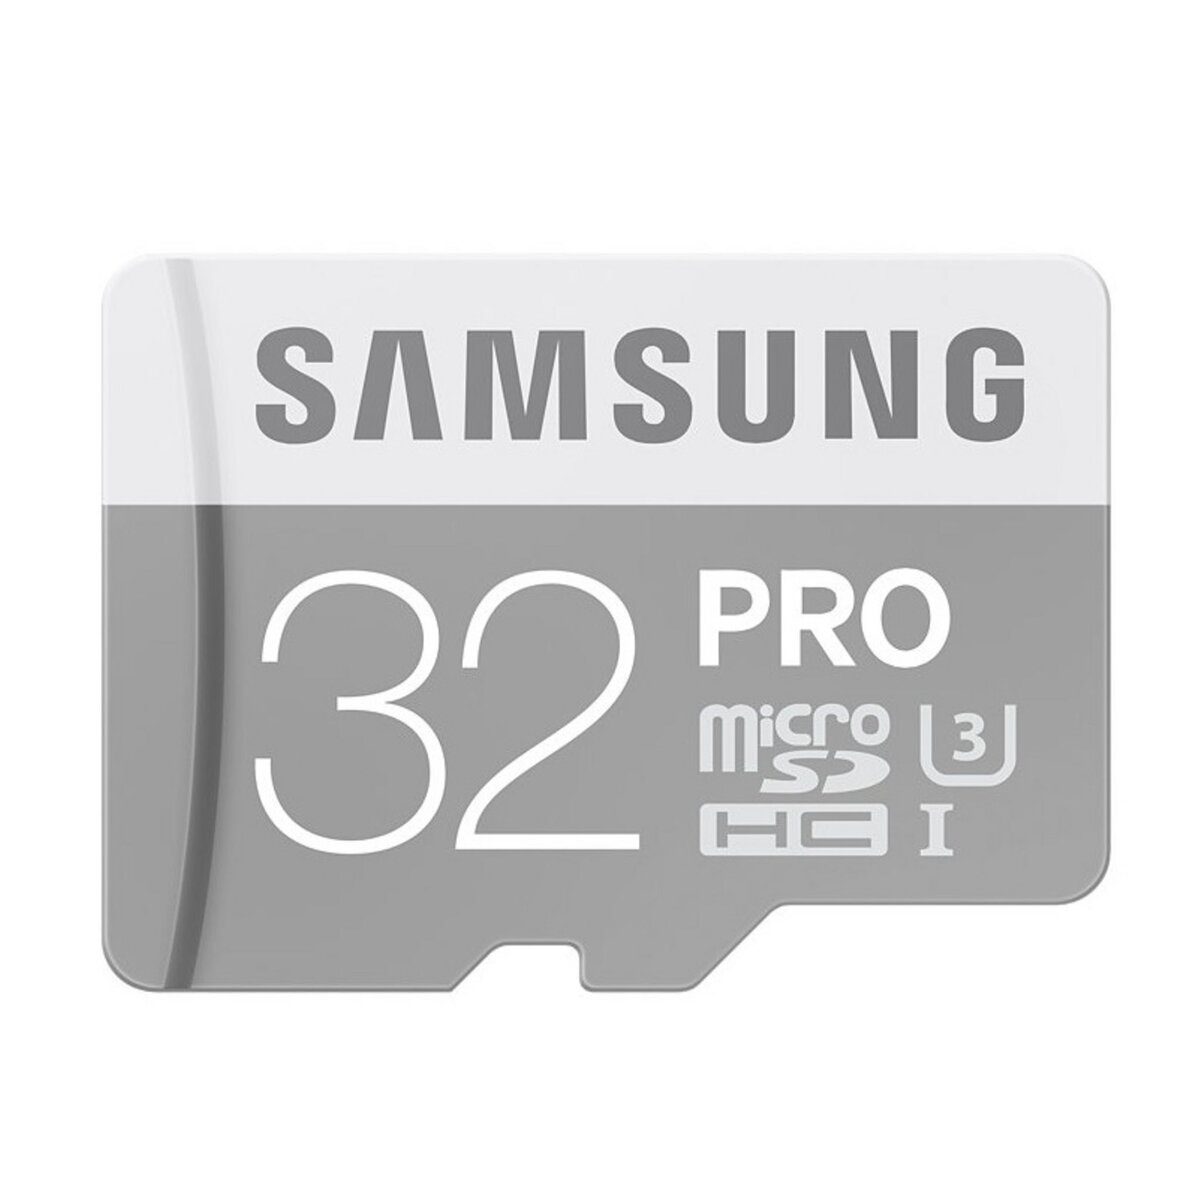 SAMSUNG Micro SDHC 32 Go Pro + Adaptateur - Carte mémoire